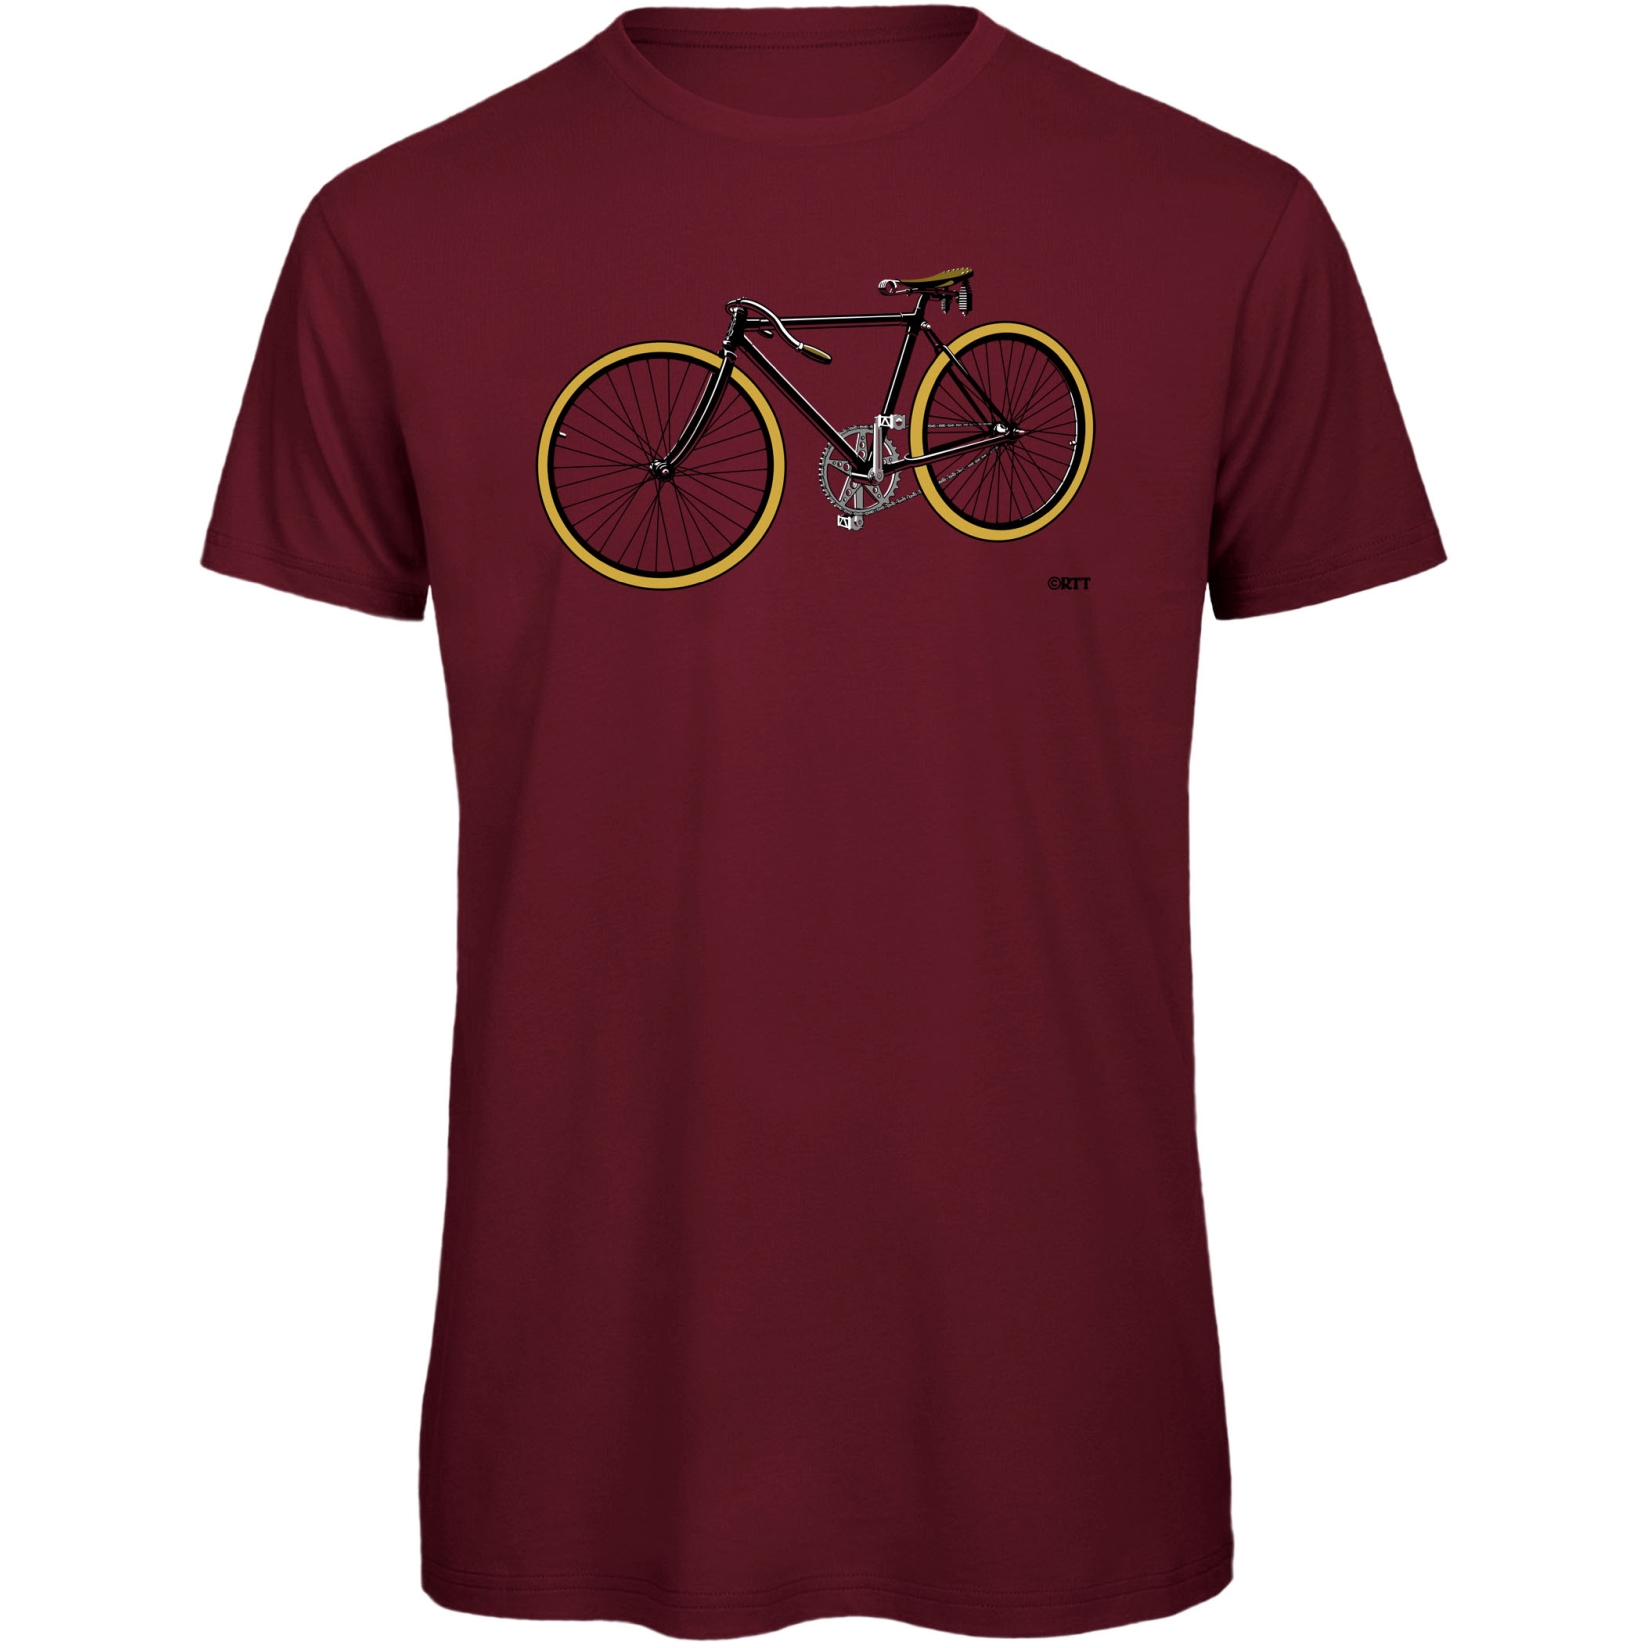 Imagen de RTTshirts Camiseta Bicicleta - Bicicleta Carretera Retro - bordeaux